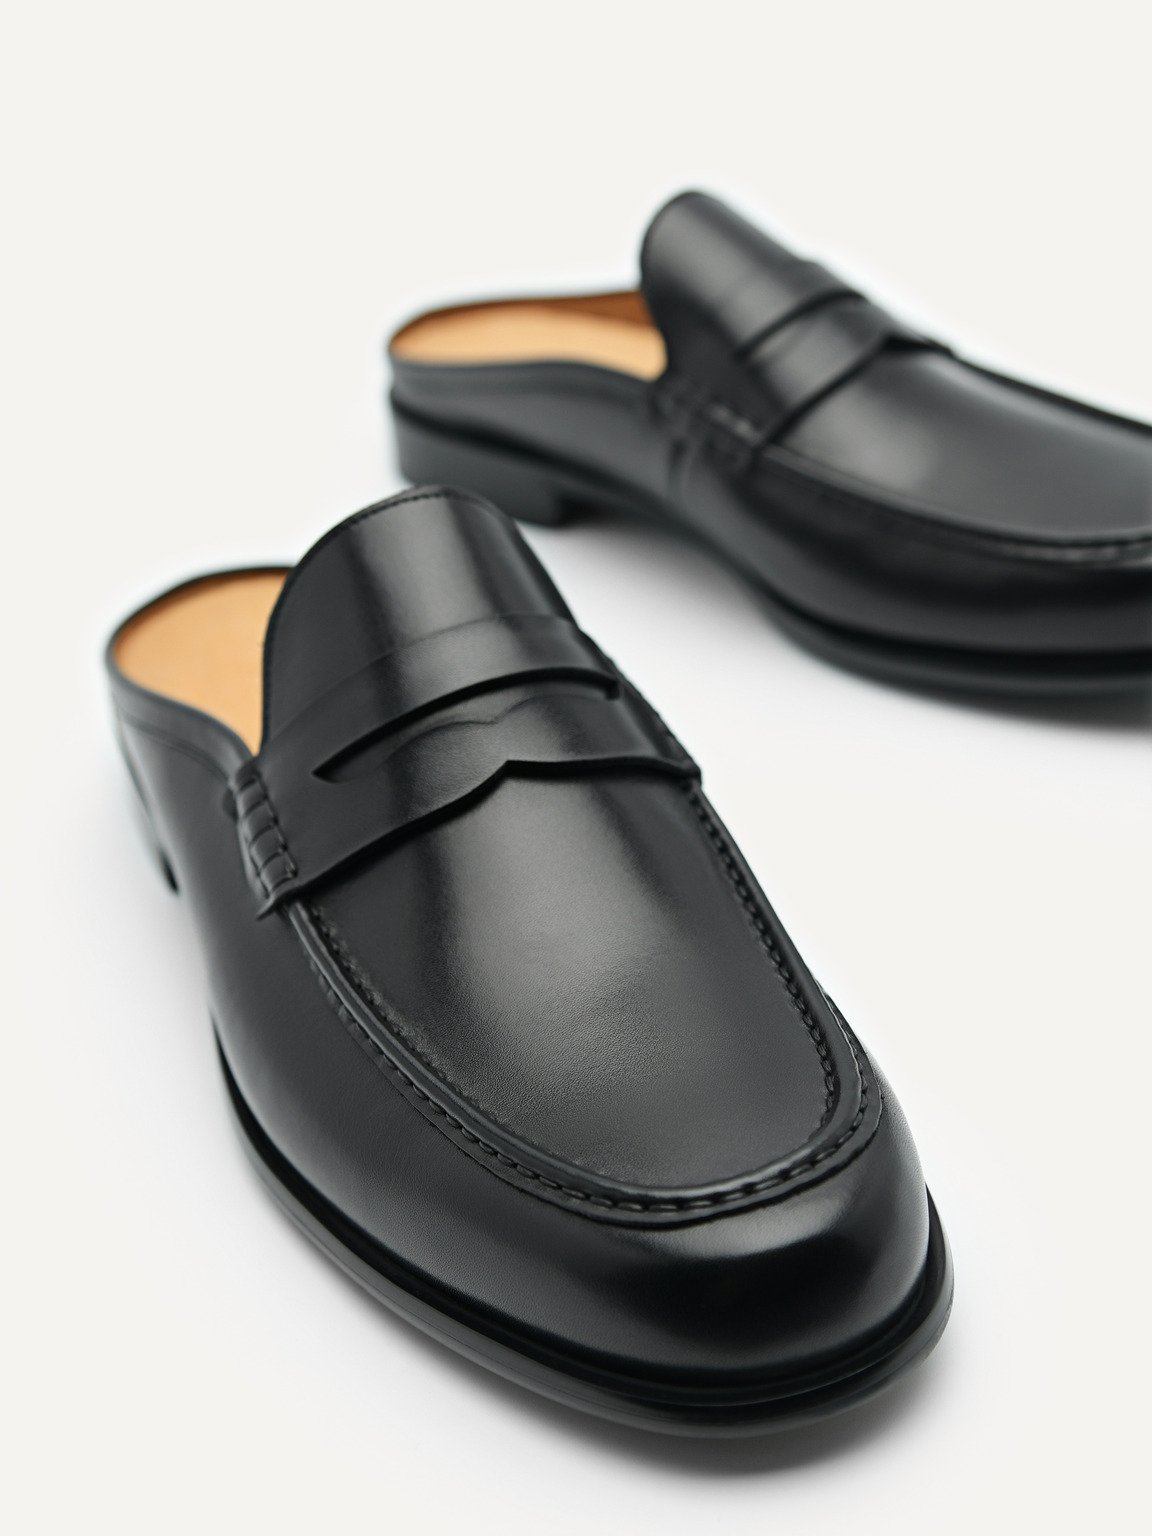 Blake Leather Slip-On Loafers, Black